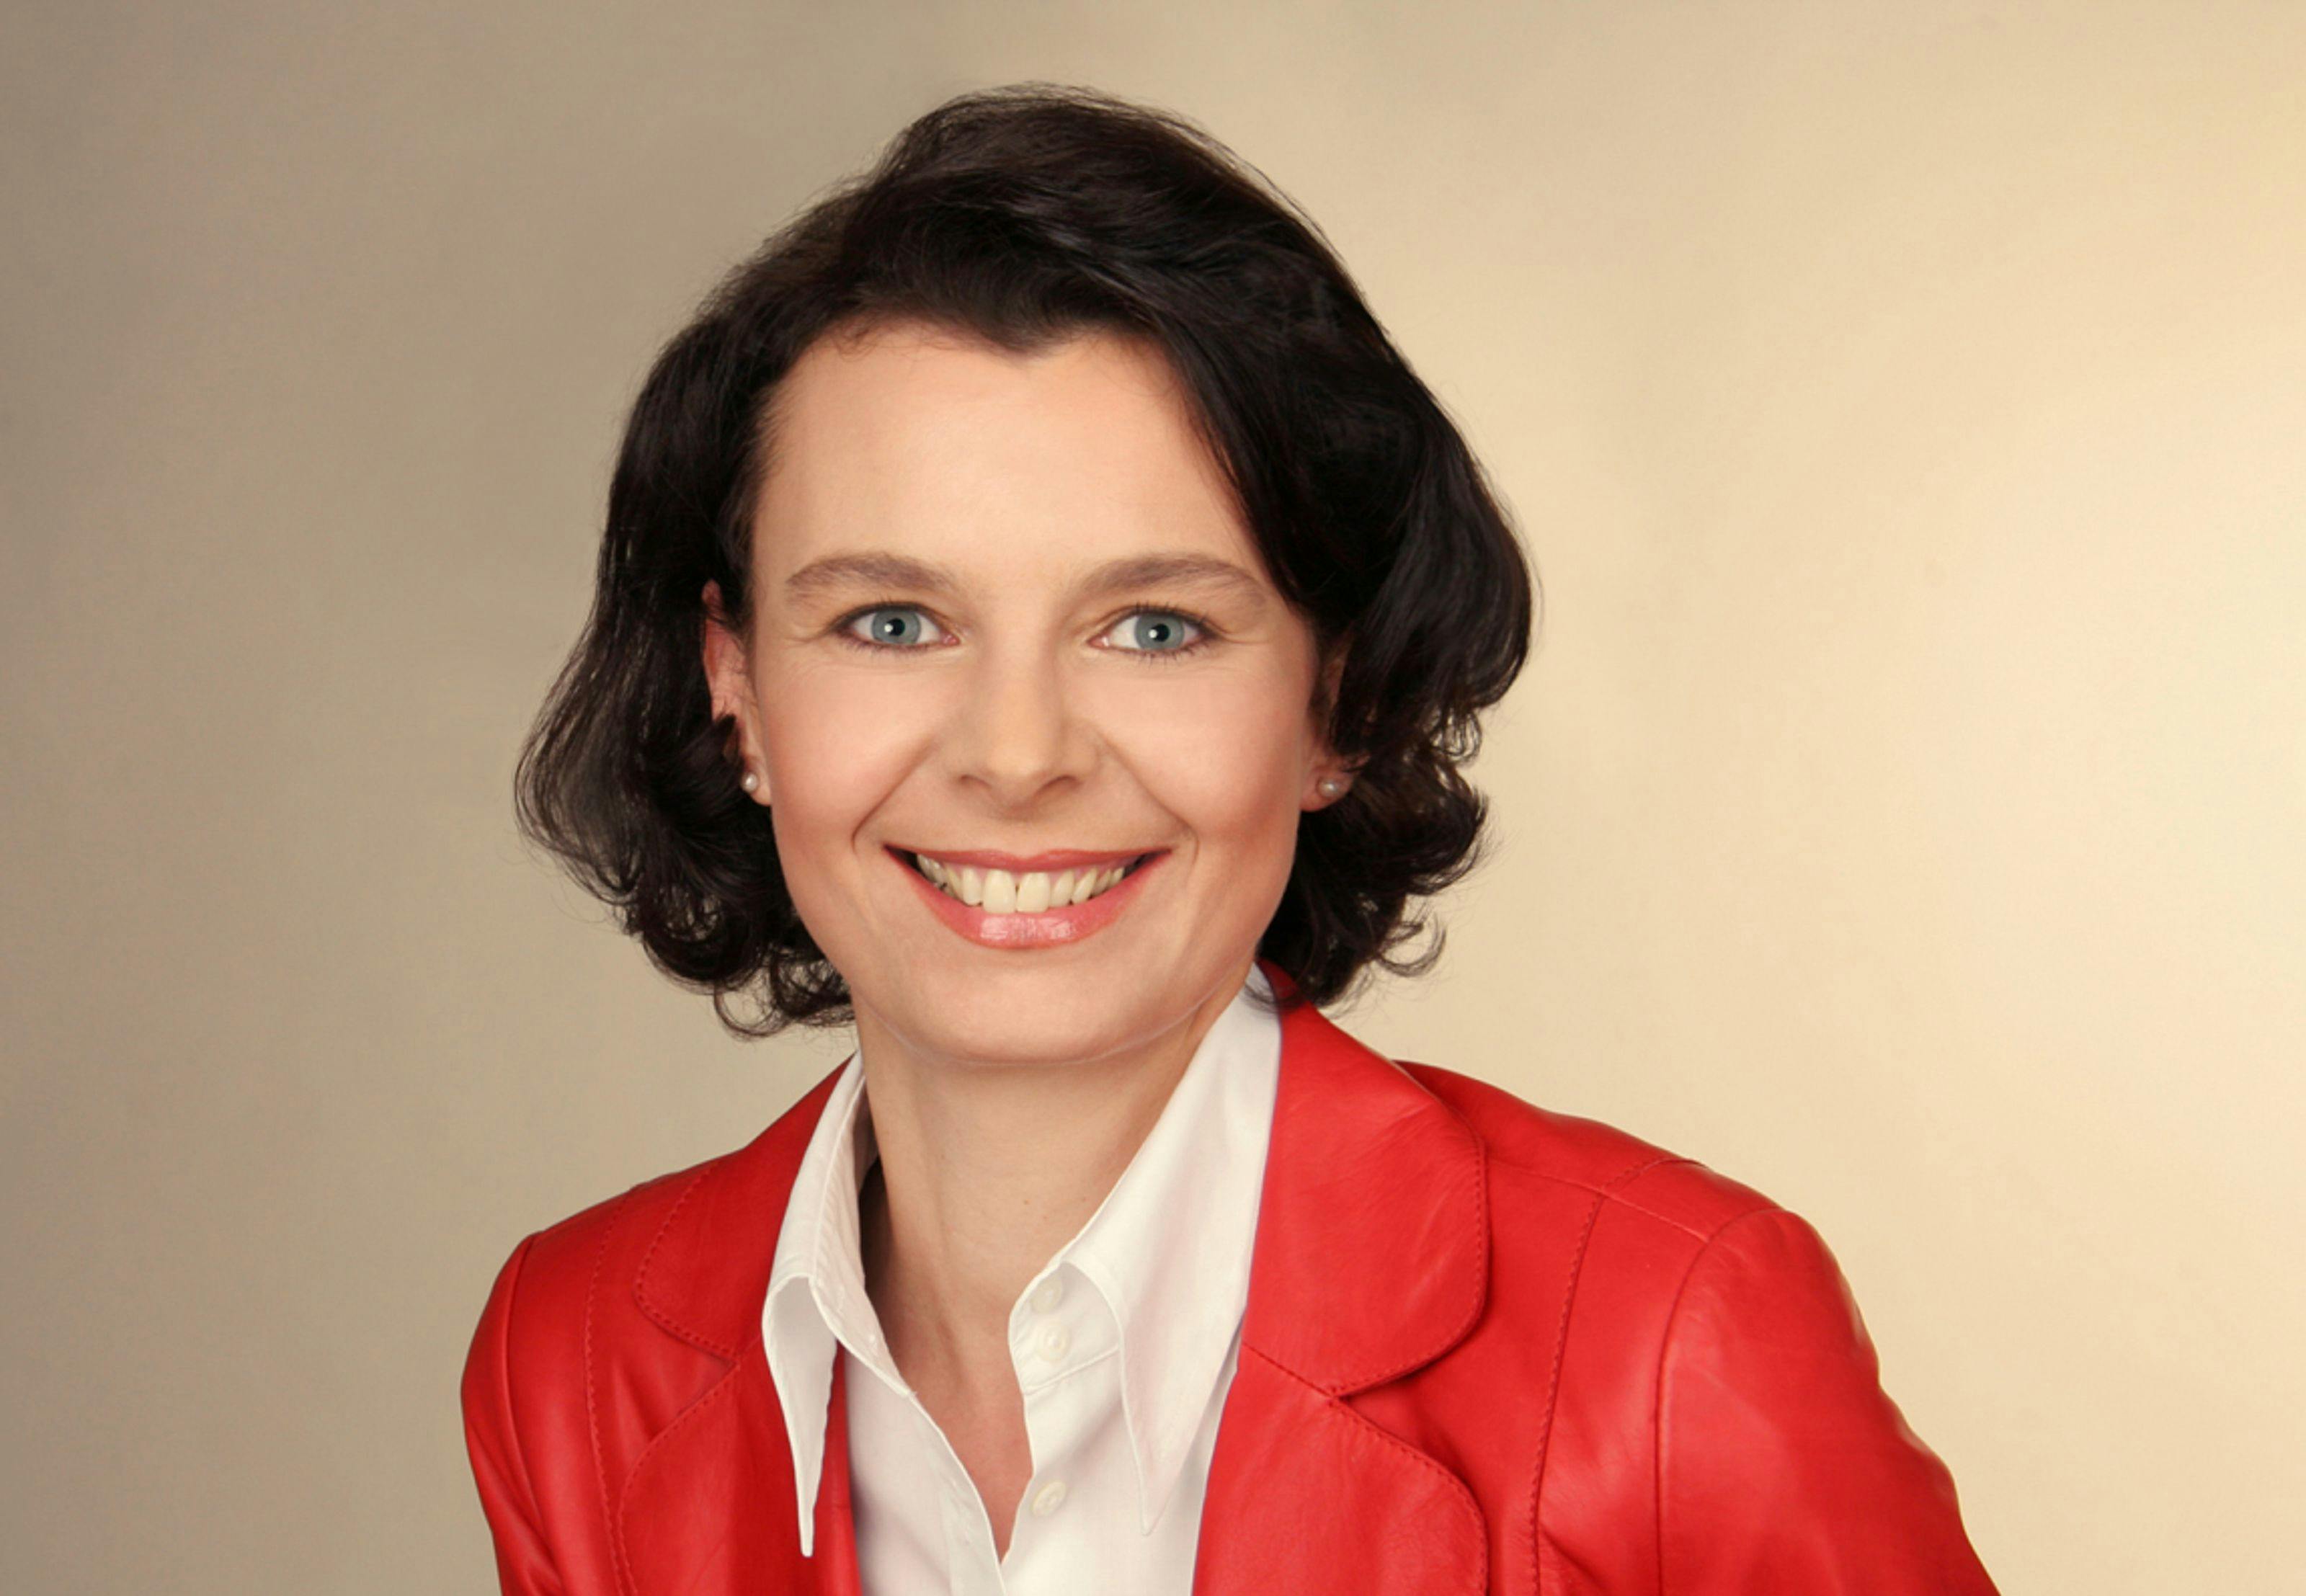 Manuela Hoehne provisional Director of Communications of Bugatti